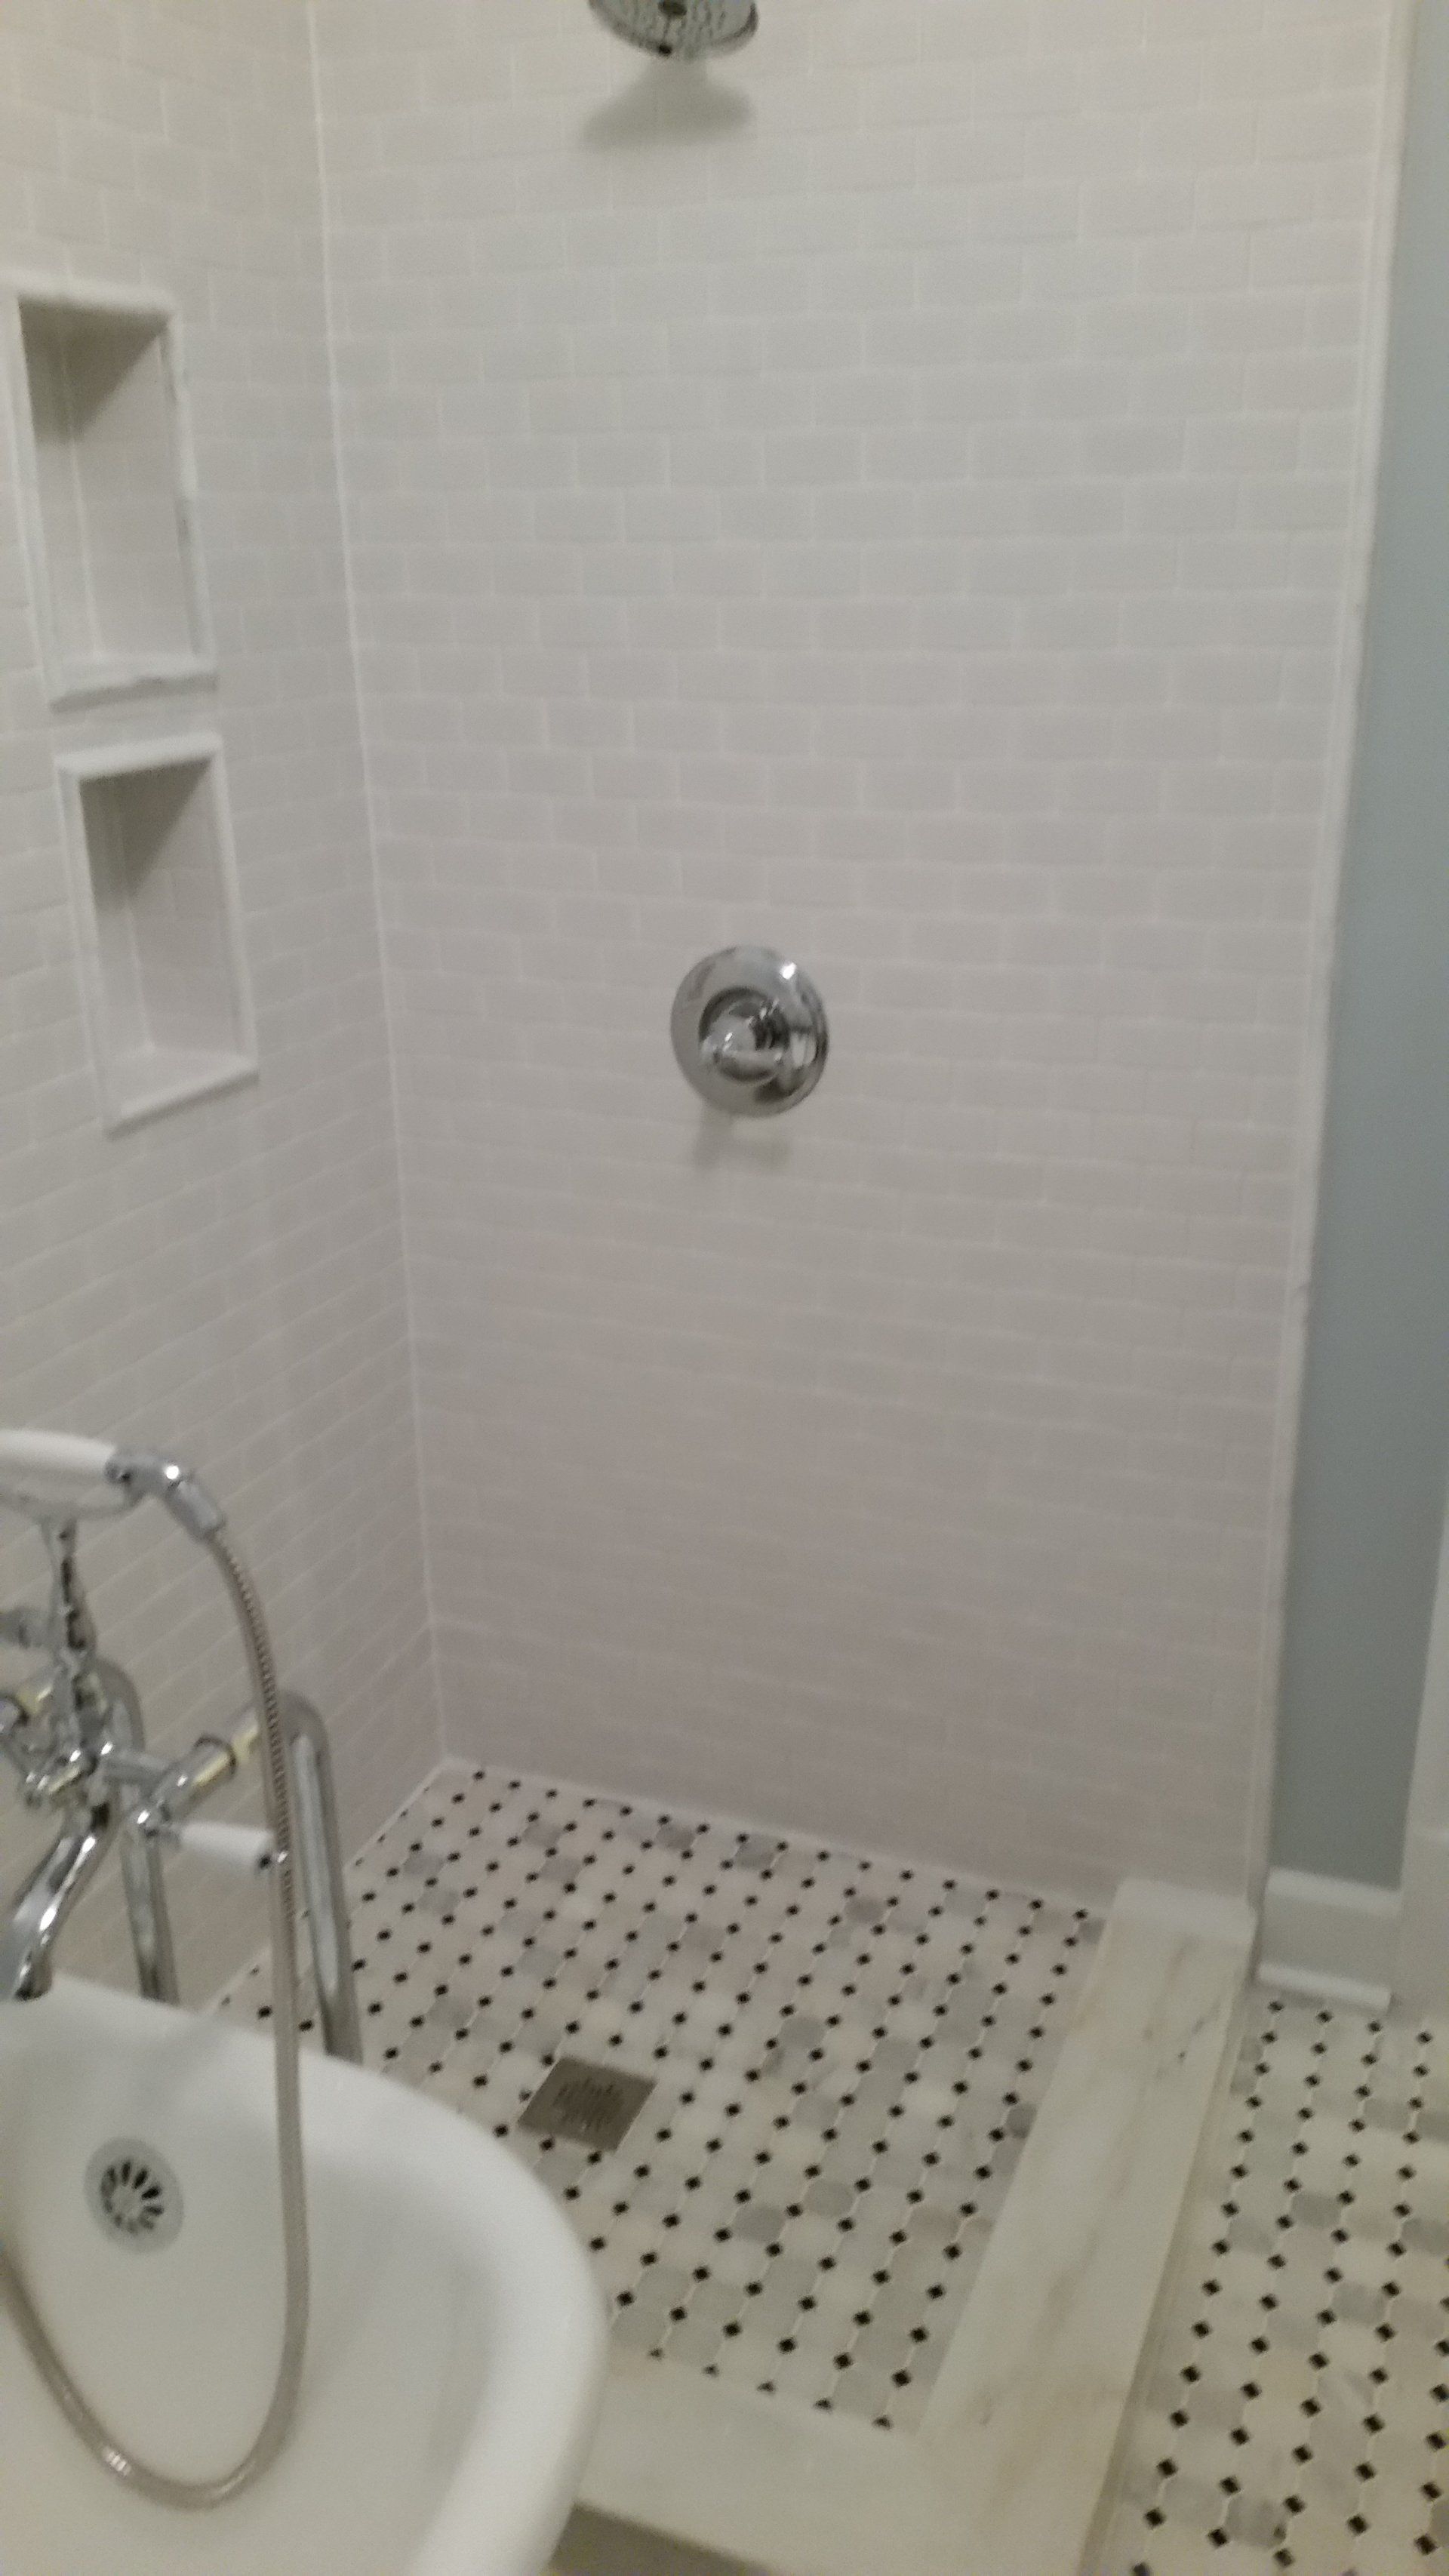 Newly installed bathroom tiles